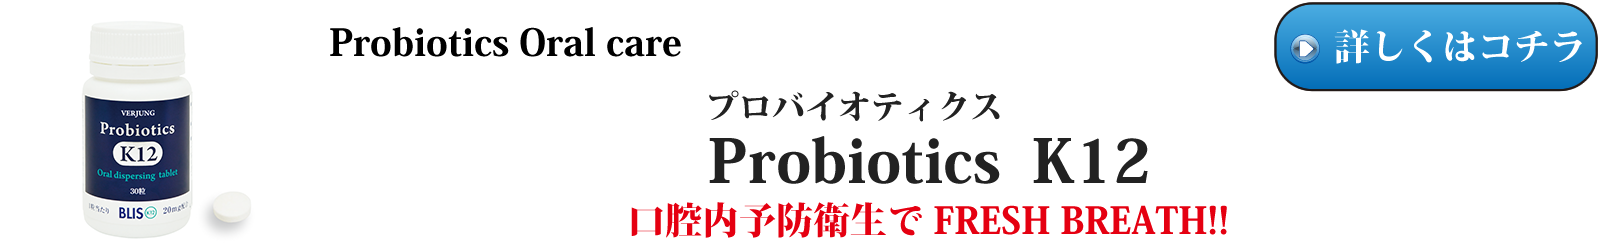 probioticsk12